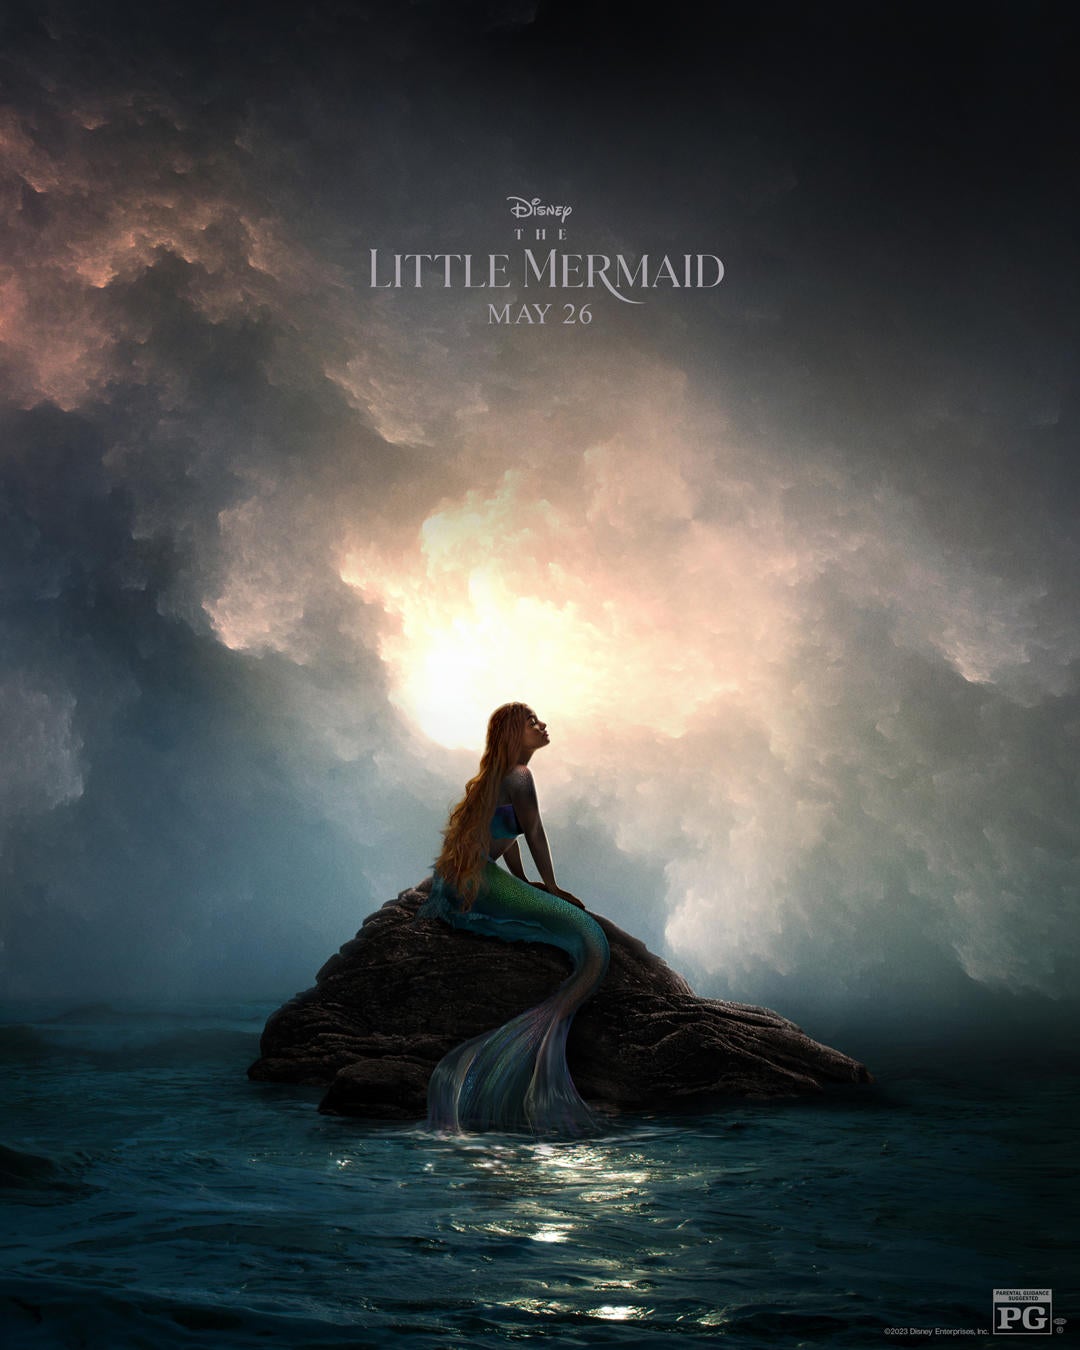 The Little Mermaid Poster Released, Trailer Announced for Oscars